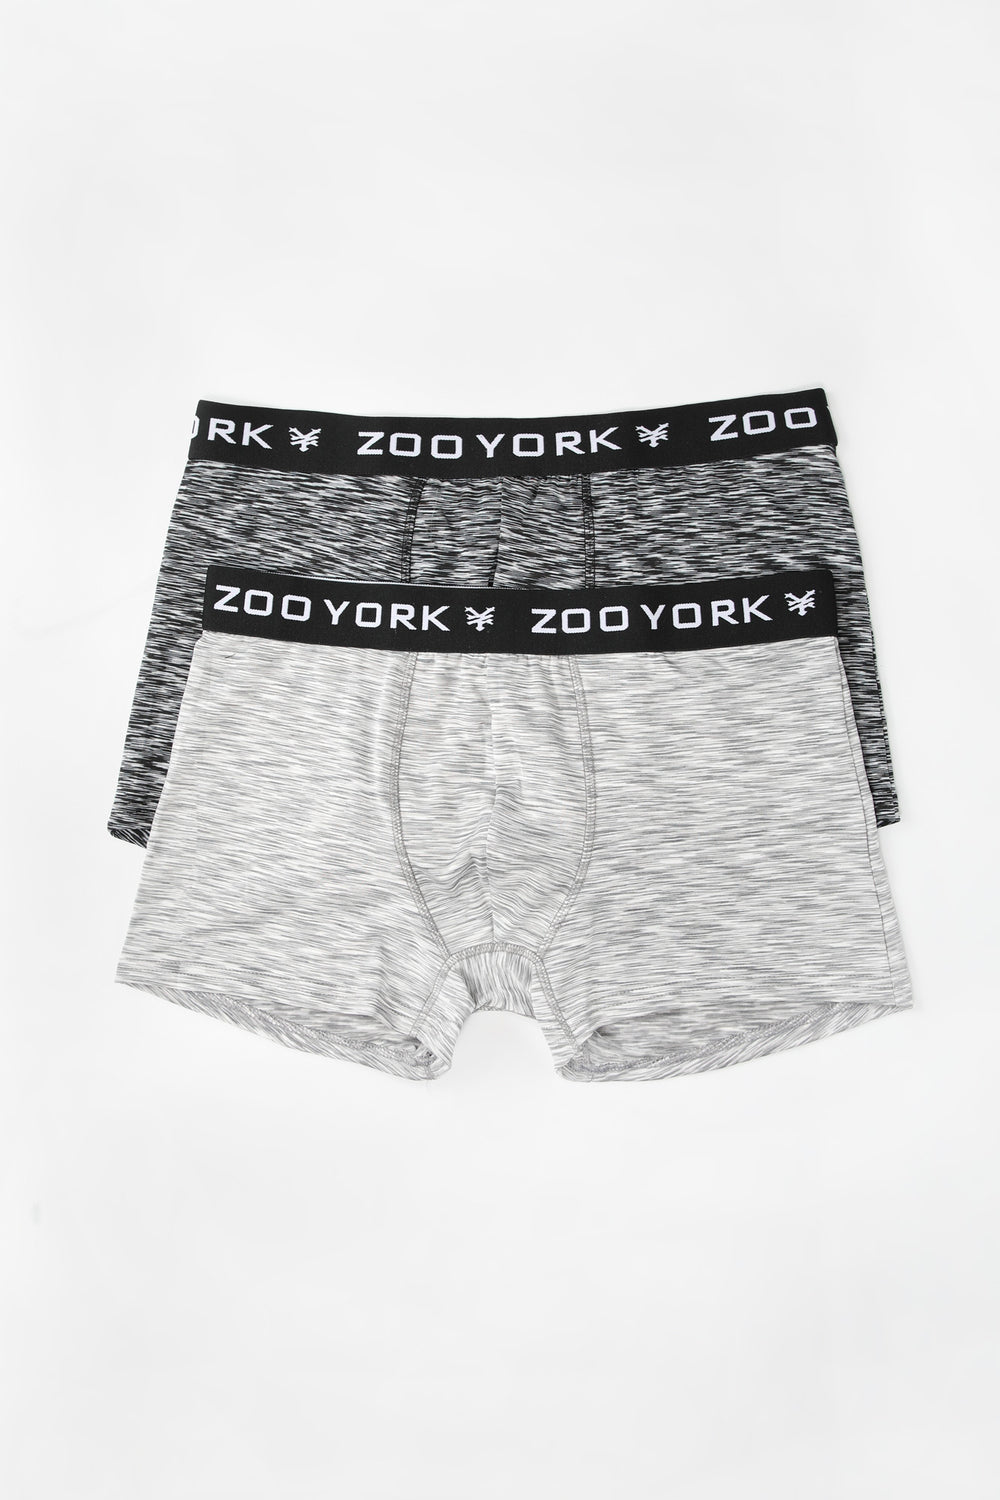 Zoo York Mens 2-Pack Space Dye Boxer Briefs Black